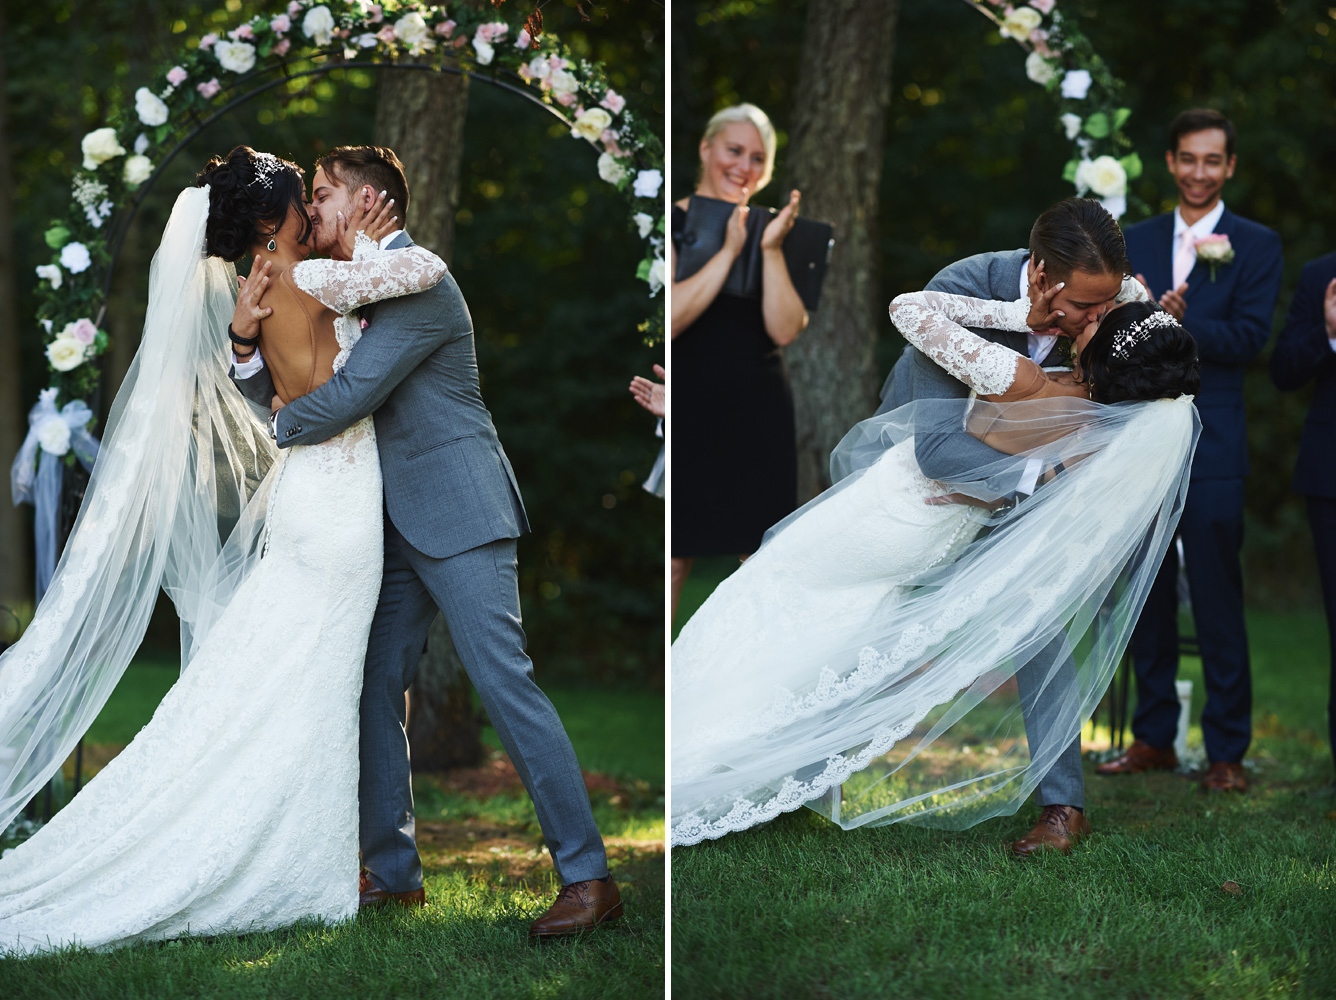 wedding-ceremony-first-kiss-between-bride-and-groom.jpg